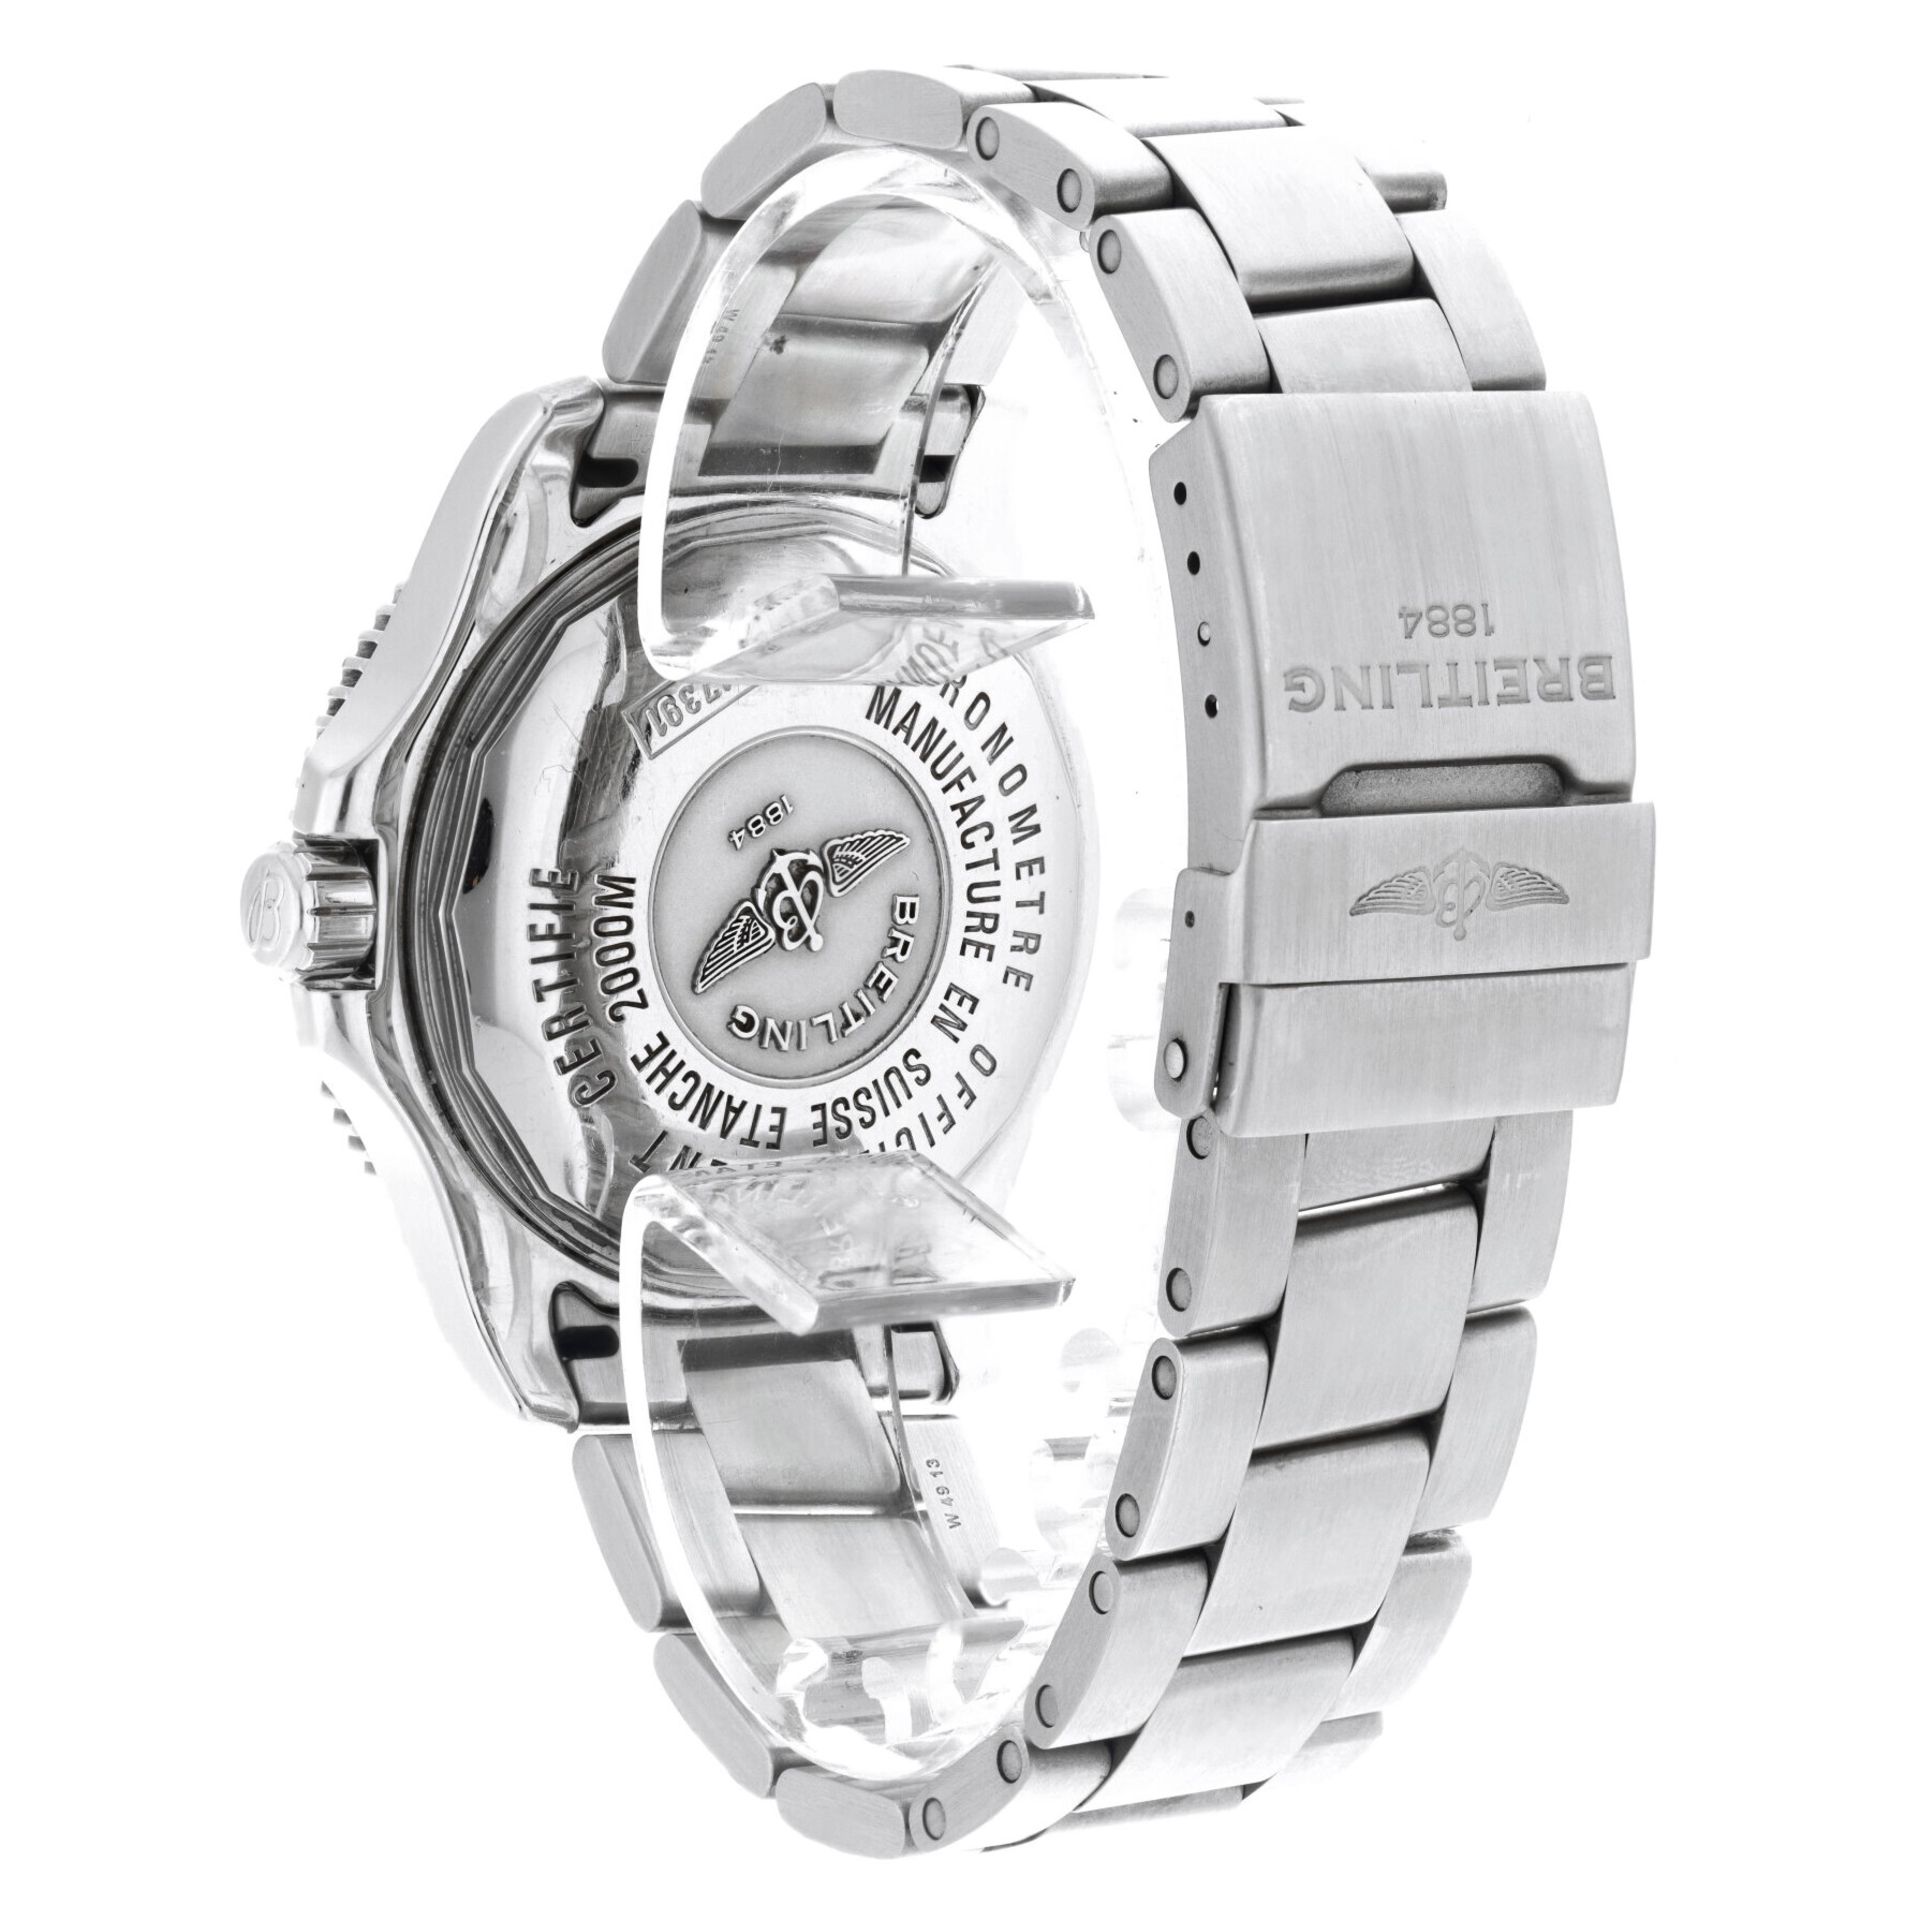 Breitling SuperOcean 44 A1739102/BA77 - Men's watch - 2014. - Image 3 of 6